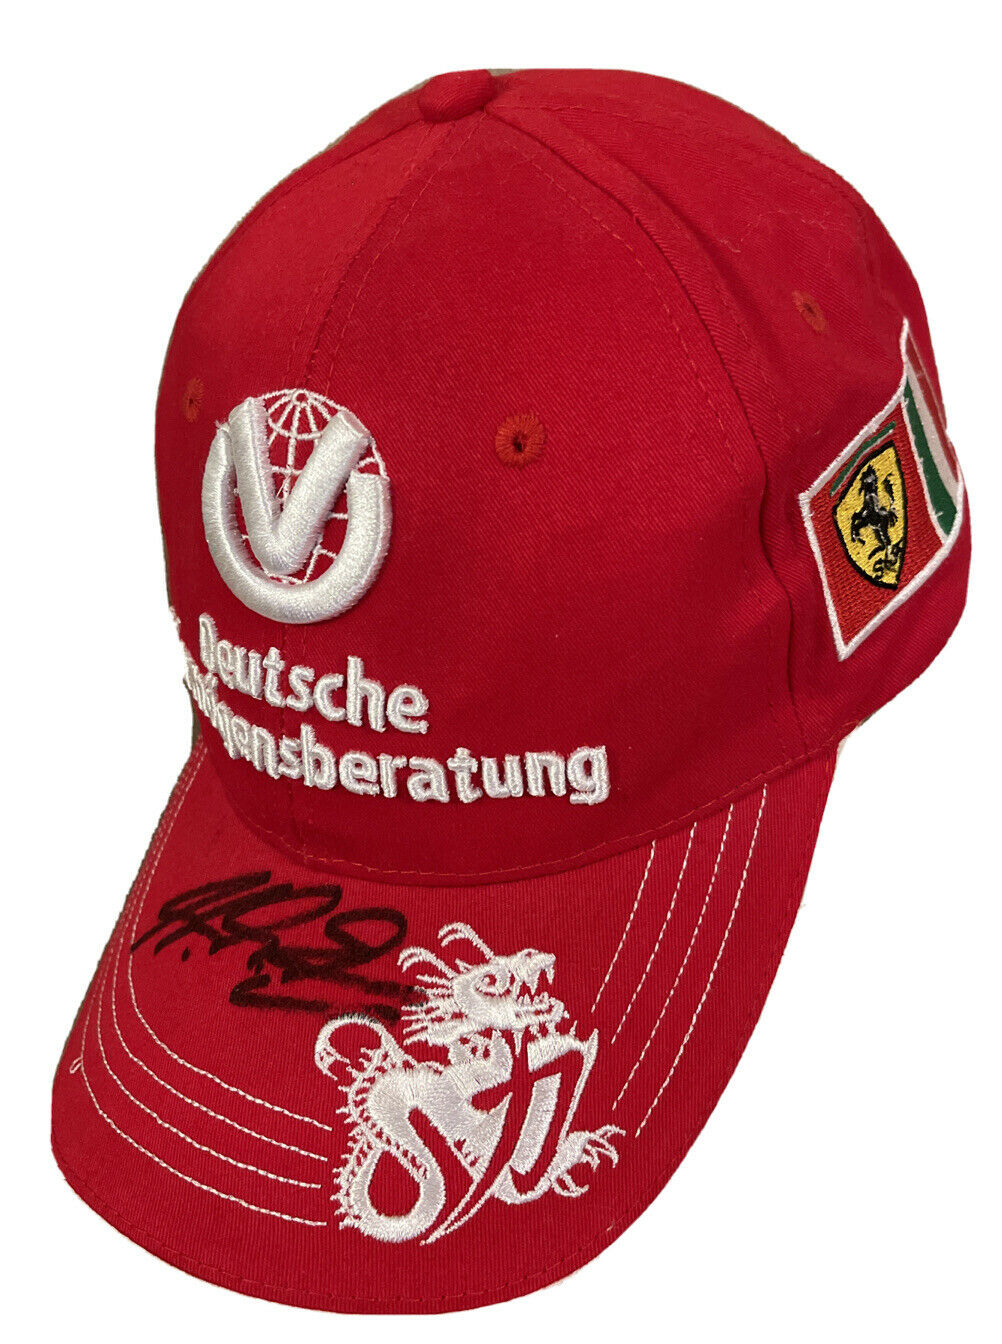 Michael Schumacher Autographed Deutsche Vermogensberatung Ferrari Hat-cap